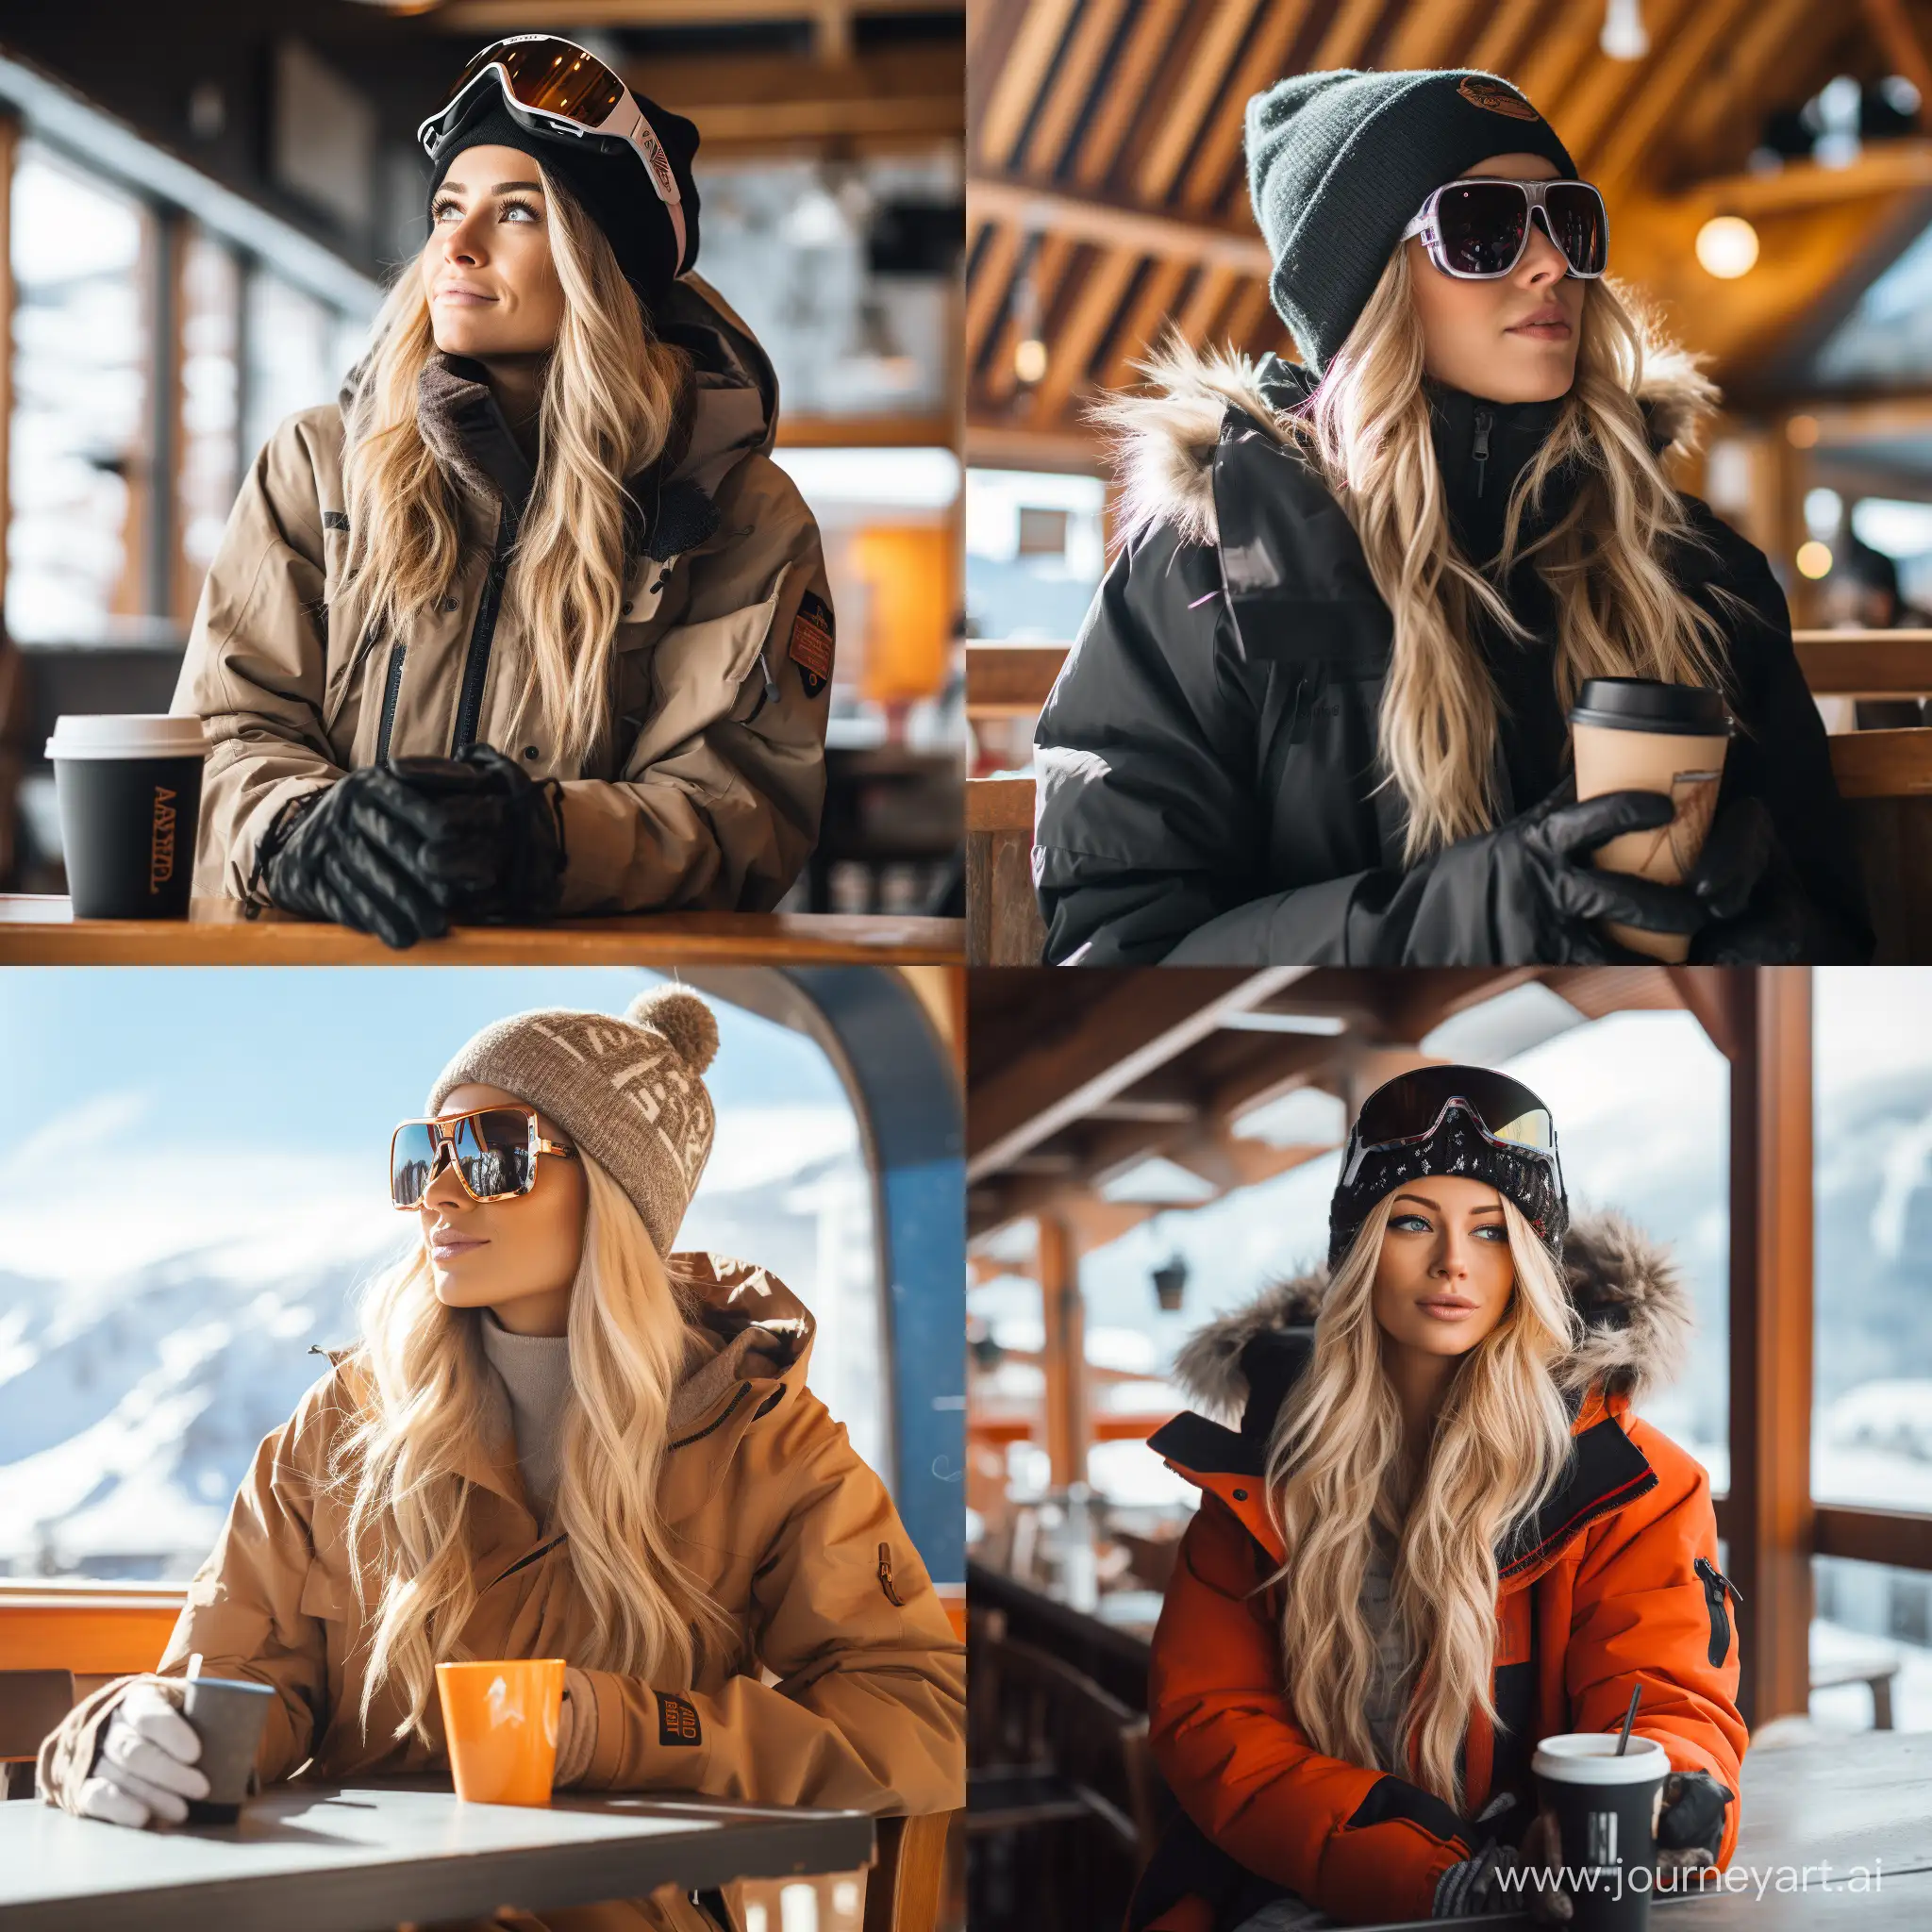 Snowboarder-Girl-Enjoying-Coffee-at-Ski-Resort